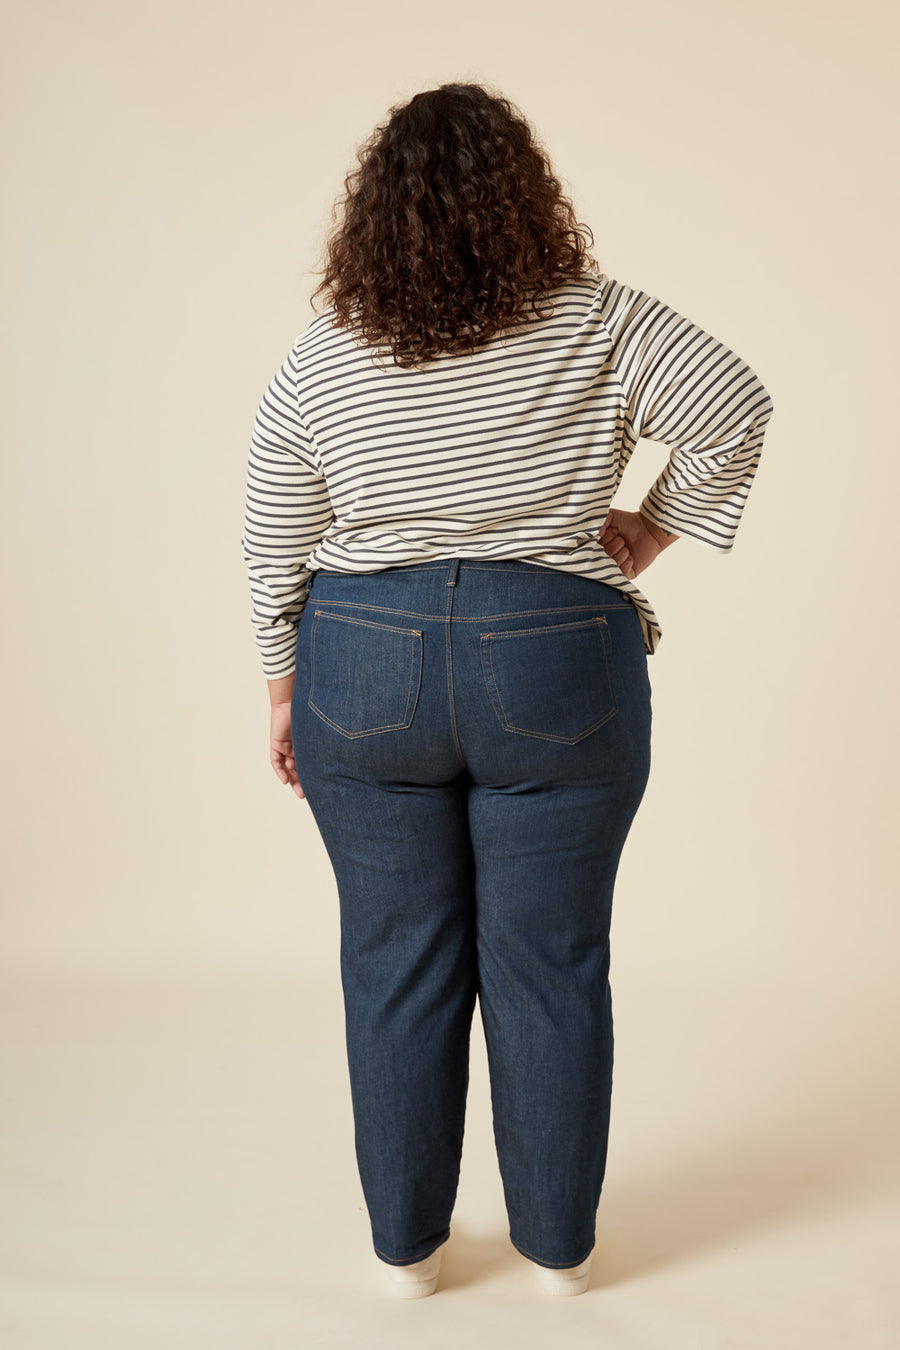 Ginger Jeans pattern | Plus Size Jeans Pattern | Closet Core Patterns